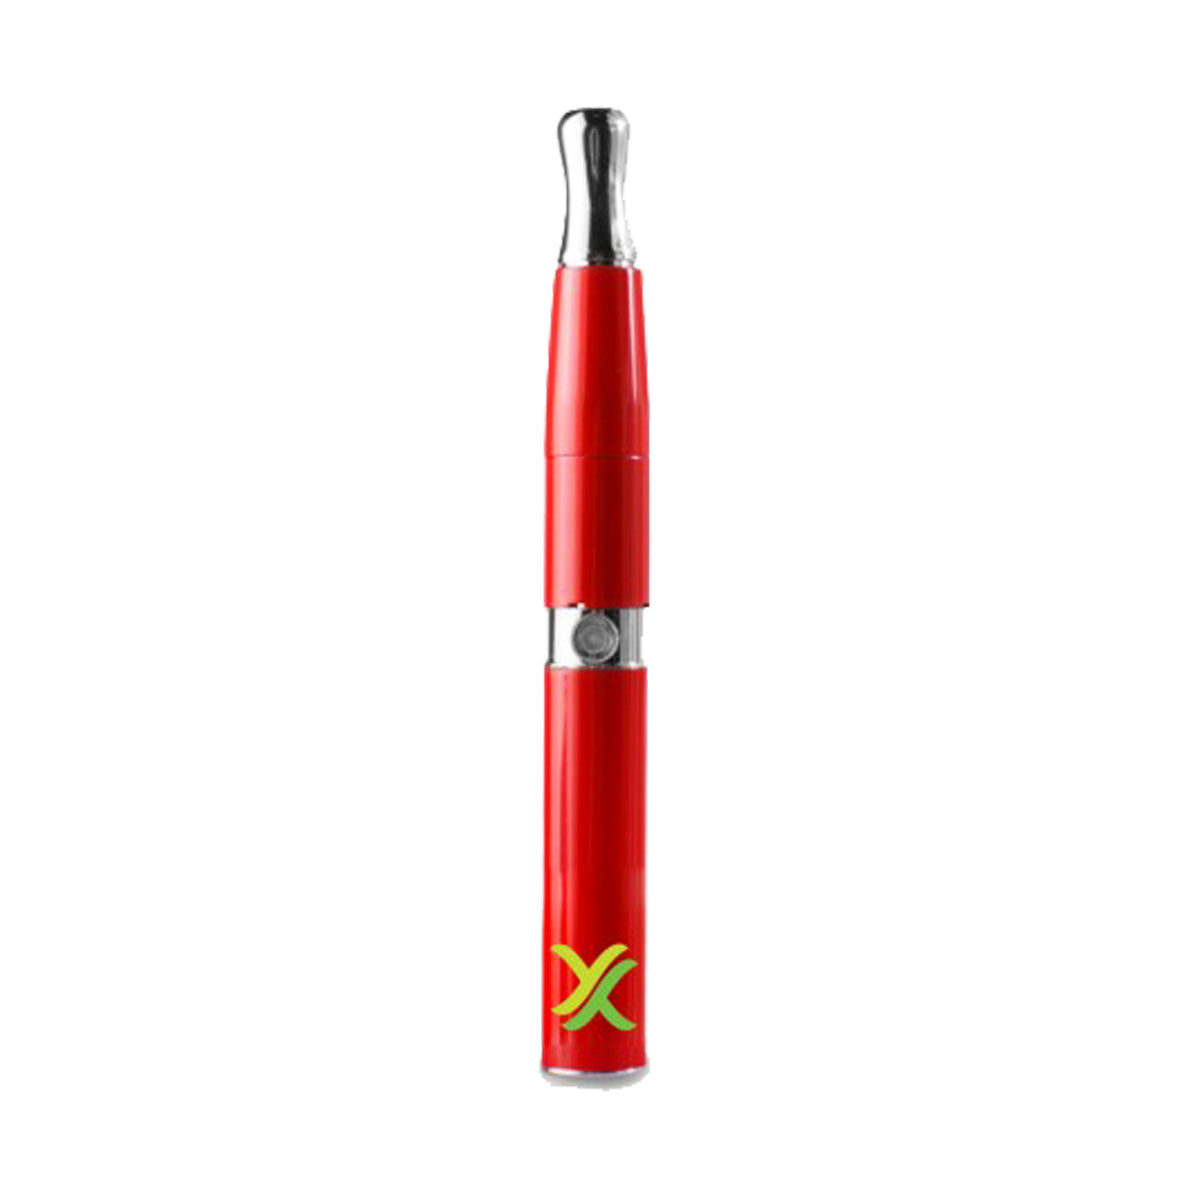 Exxus Vape Pen | Maxx Concentrate Kit Vaporizer | 650mAh - Red